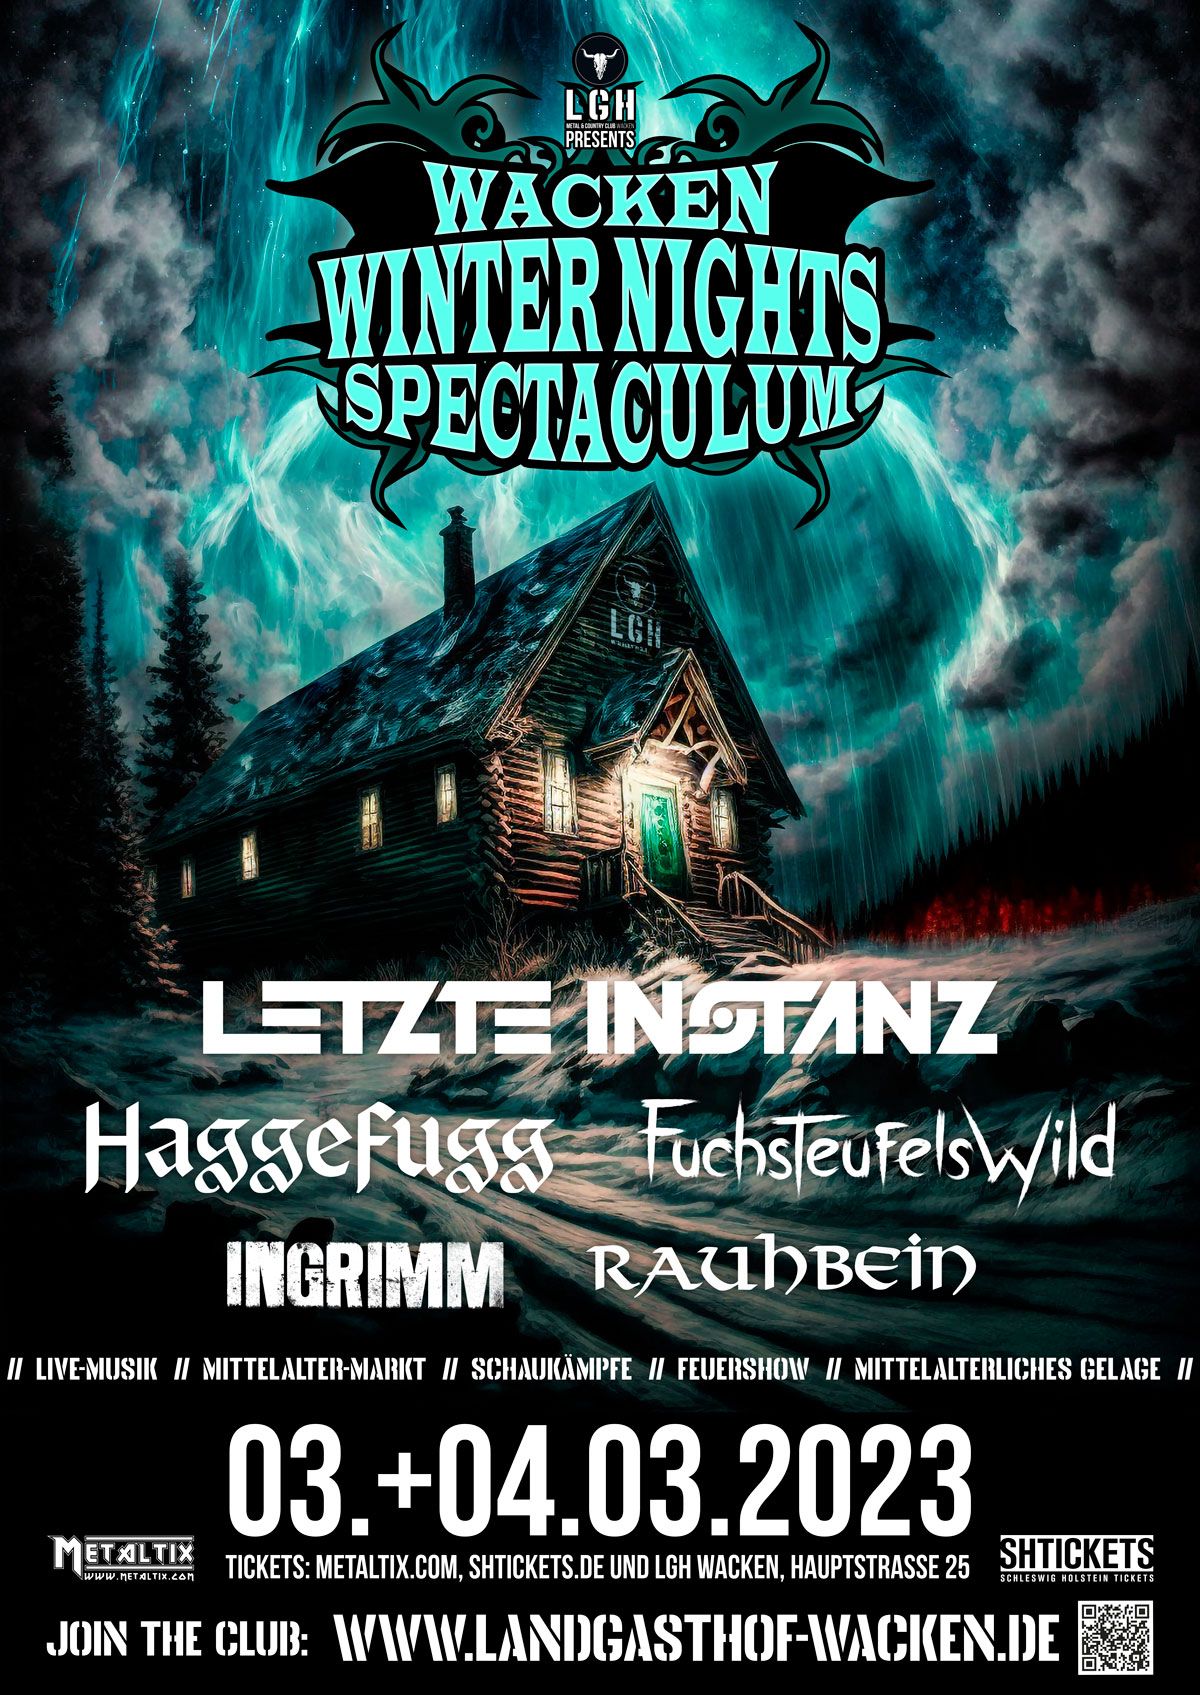 LGH Wacken präsentiert: Wacken Winter Nights Spectaculum